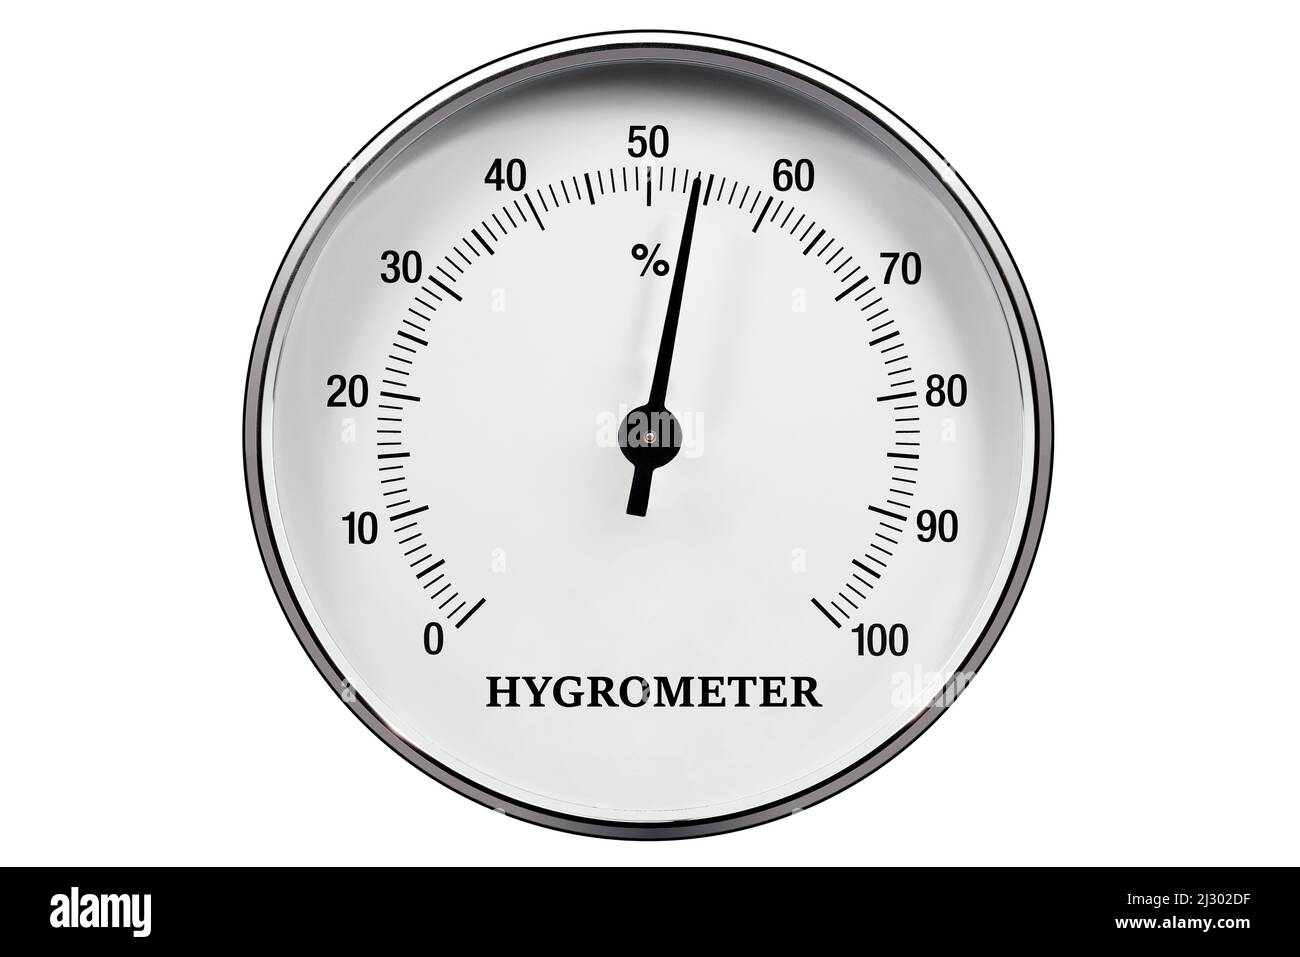 How Hygrometer Works Flash Sales - www.puzzlewood.net 1695504115